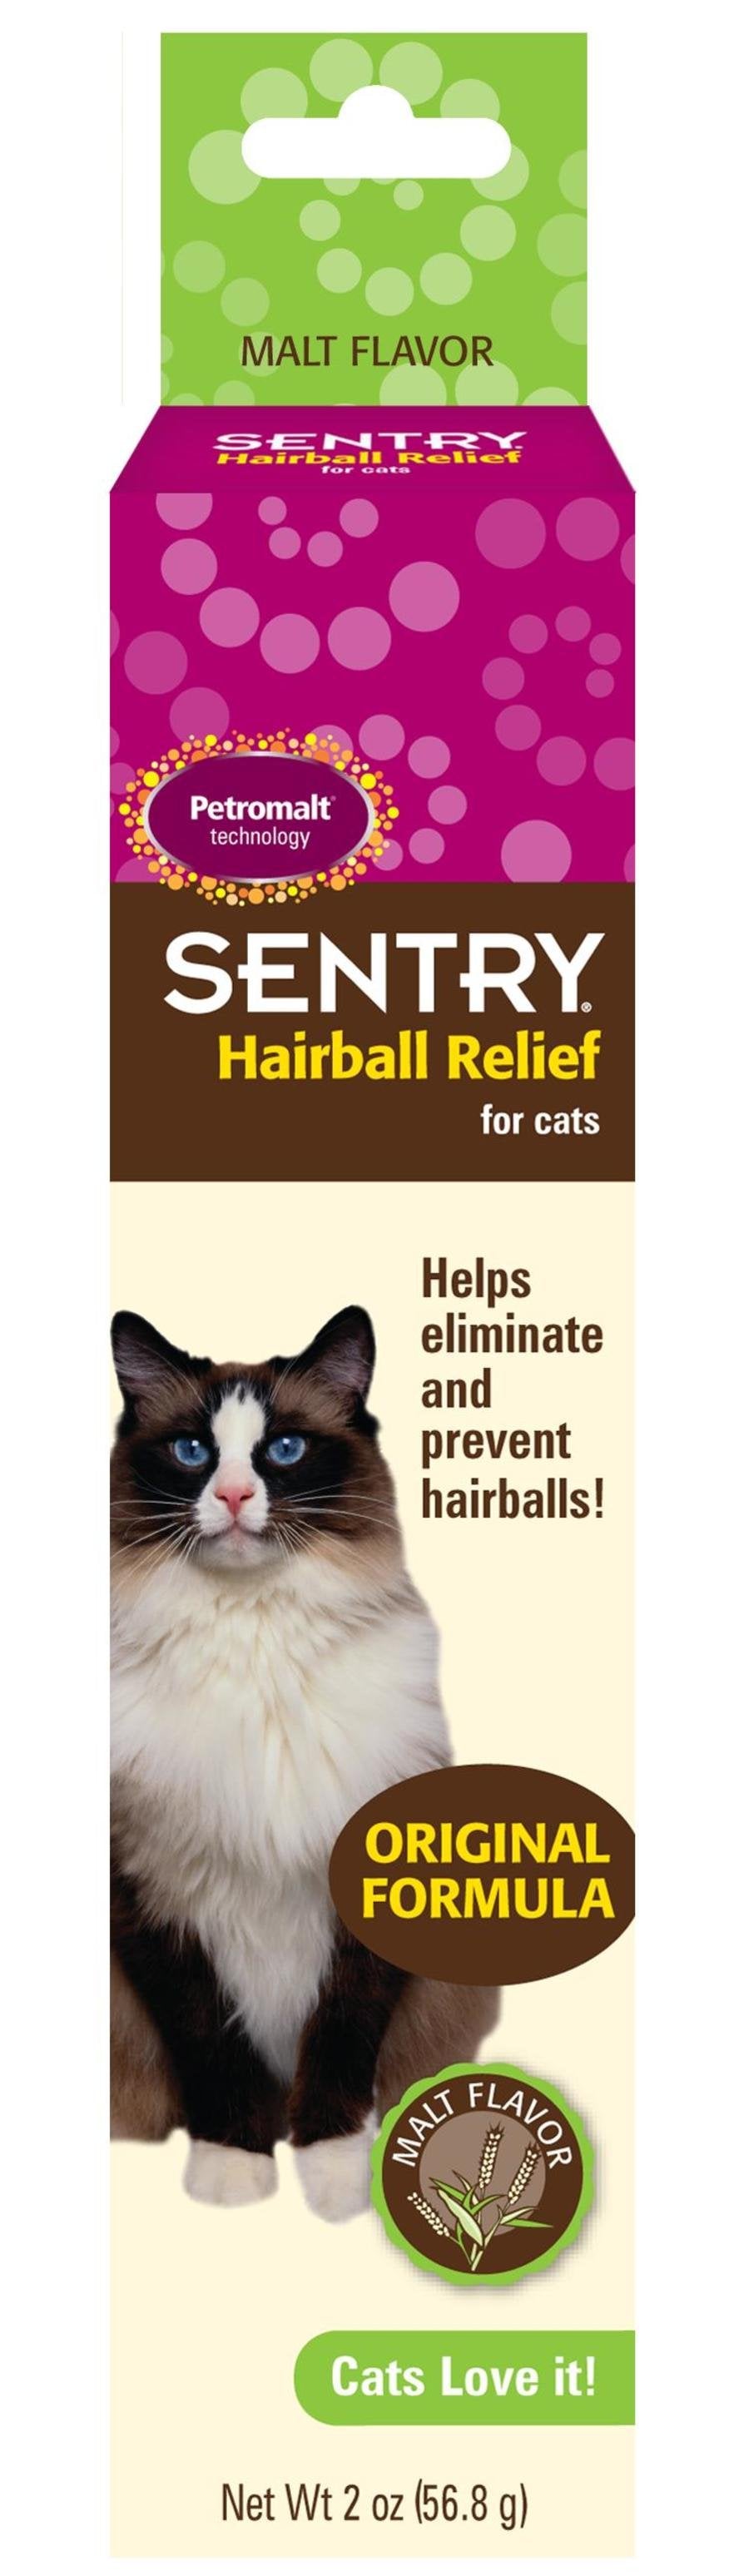 Sentry Cat Hairball Relief Malt Flavor 2oz, Sentry